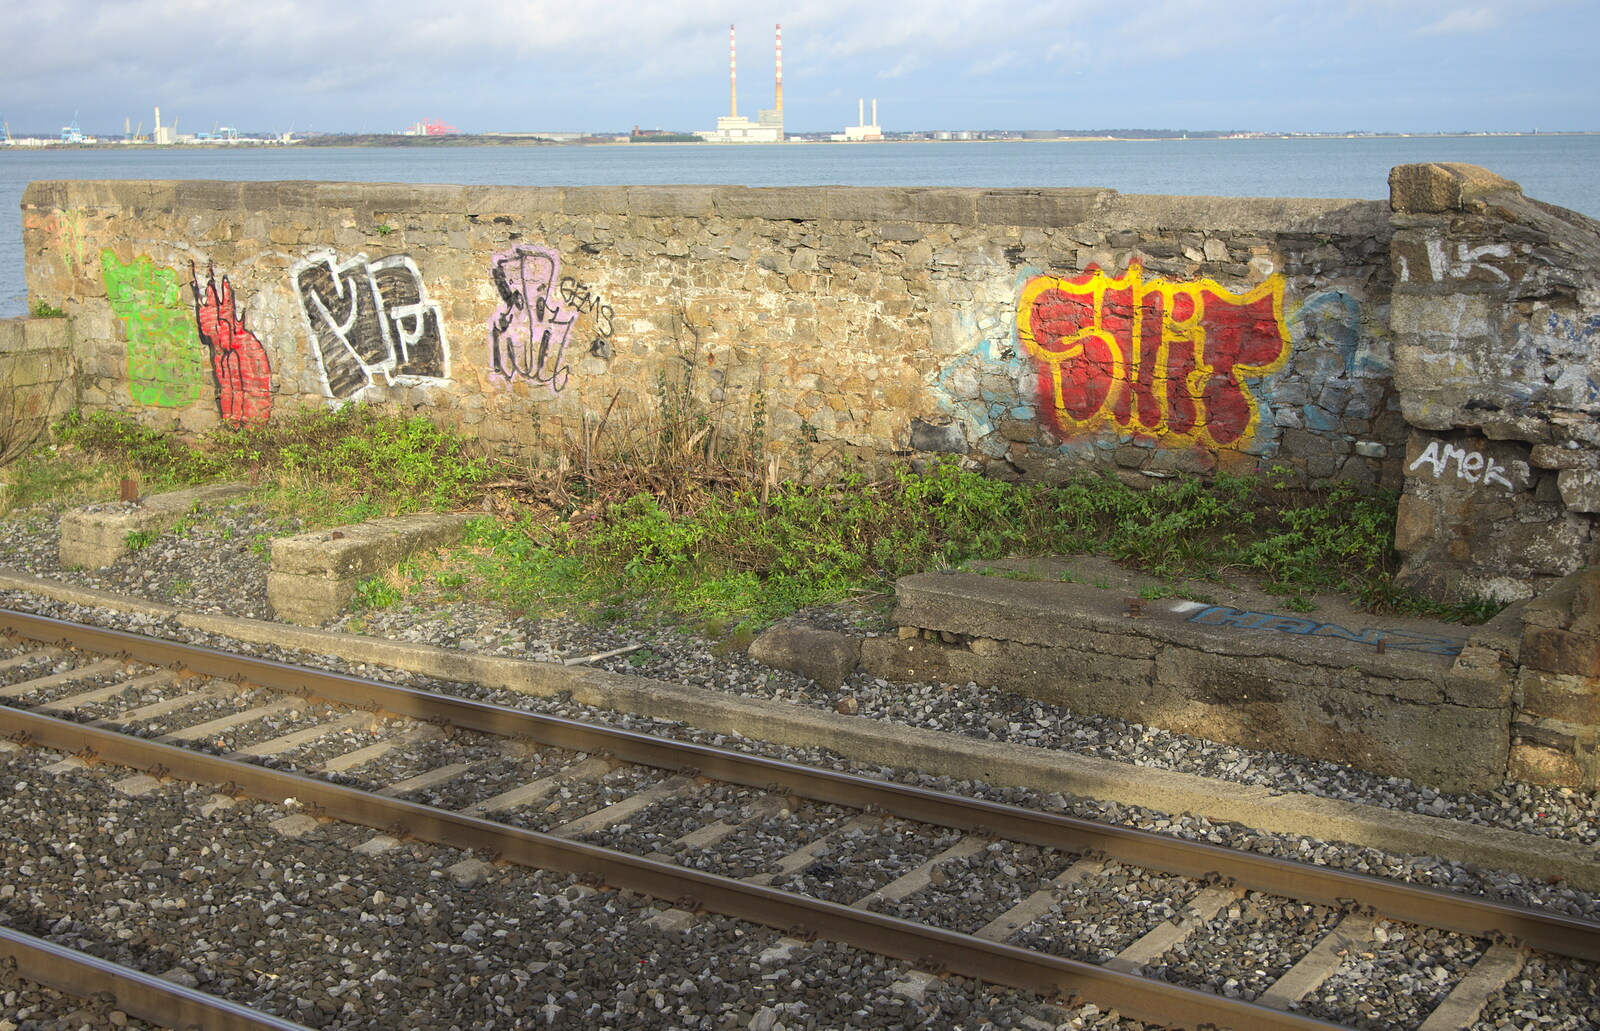 Graffiti and the Winkies, in Dublin Bay from A Morning in Blackrock, County Dublin, Ireland - 8th January 2012